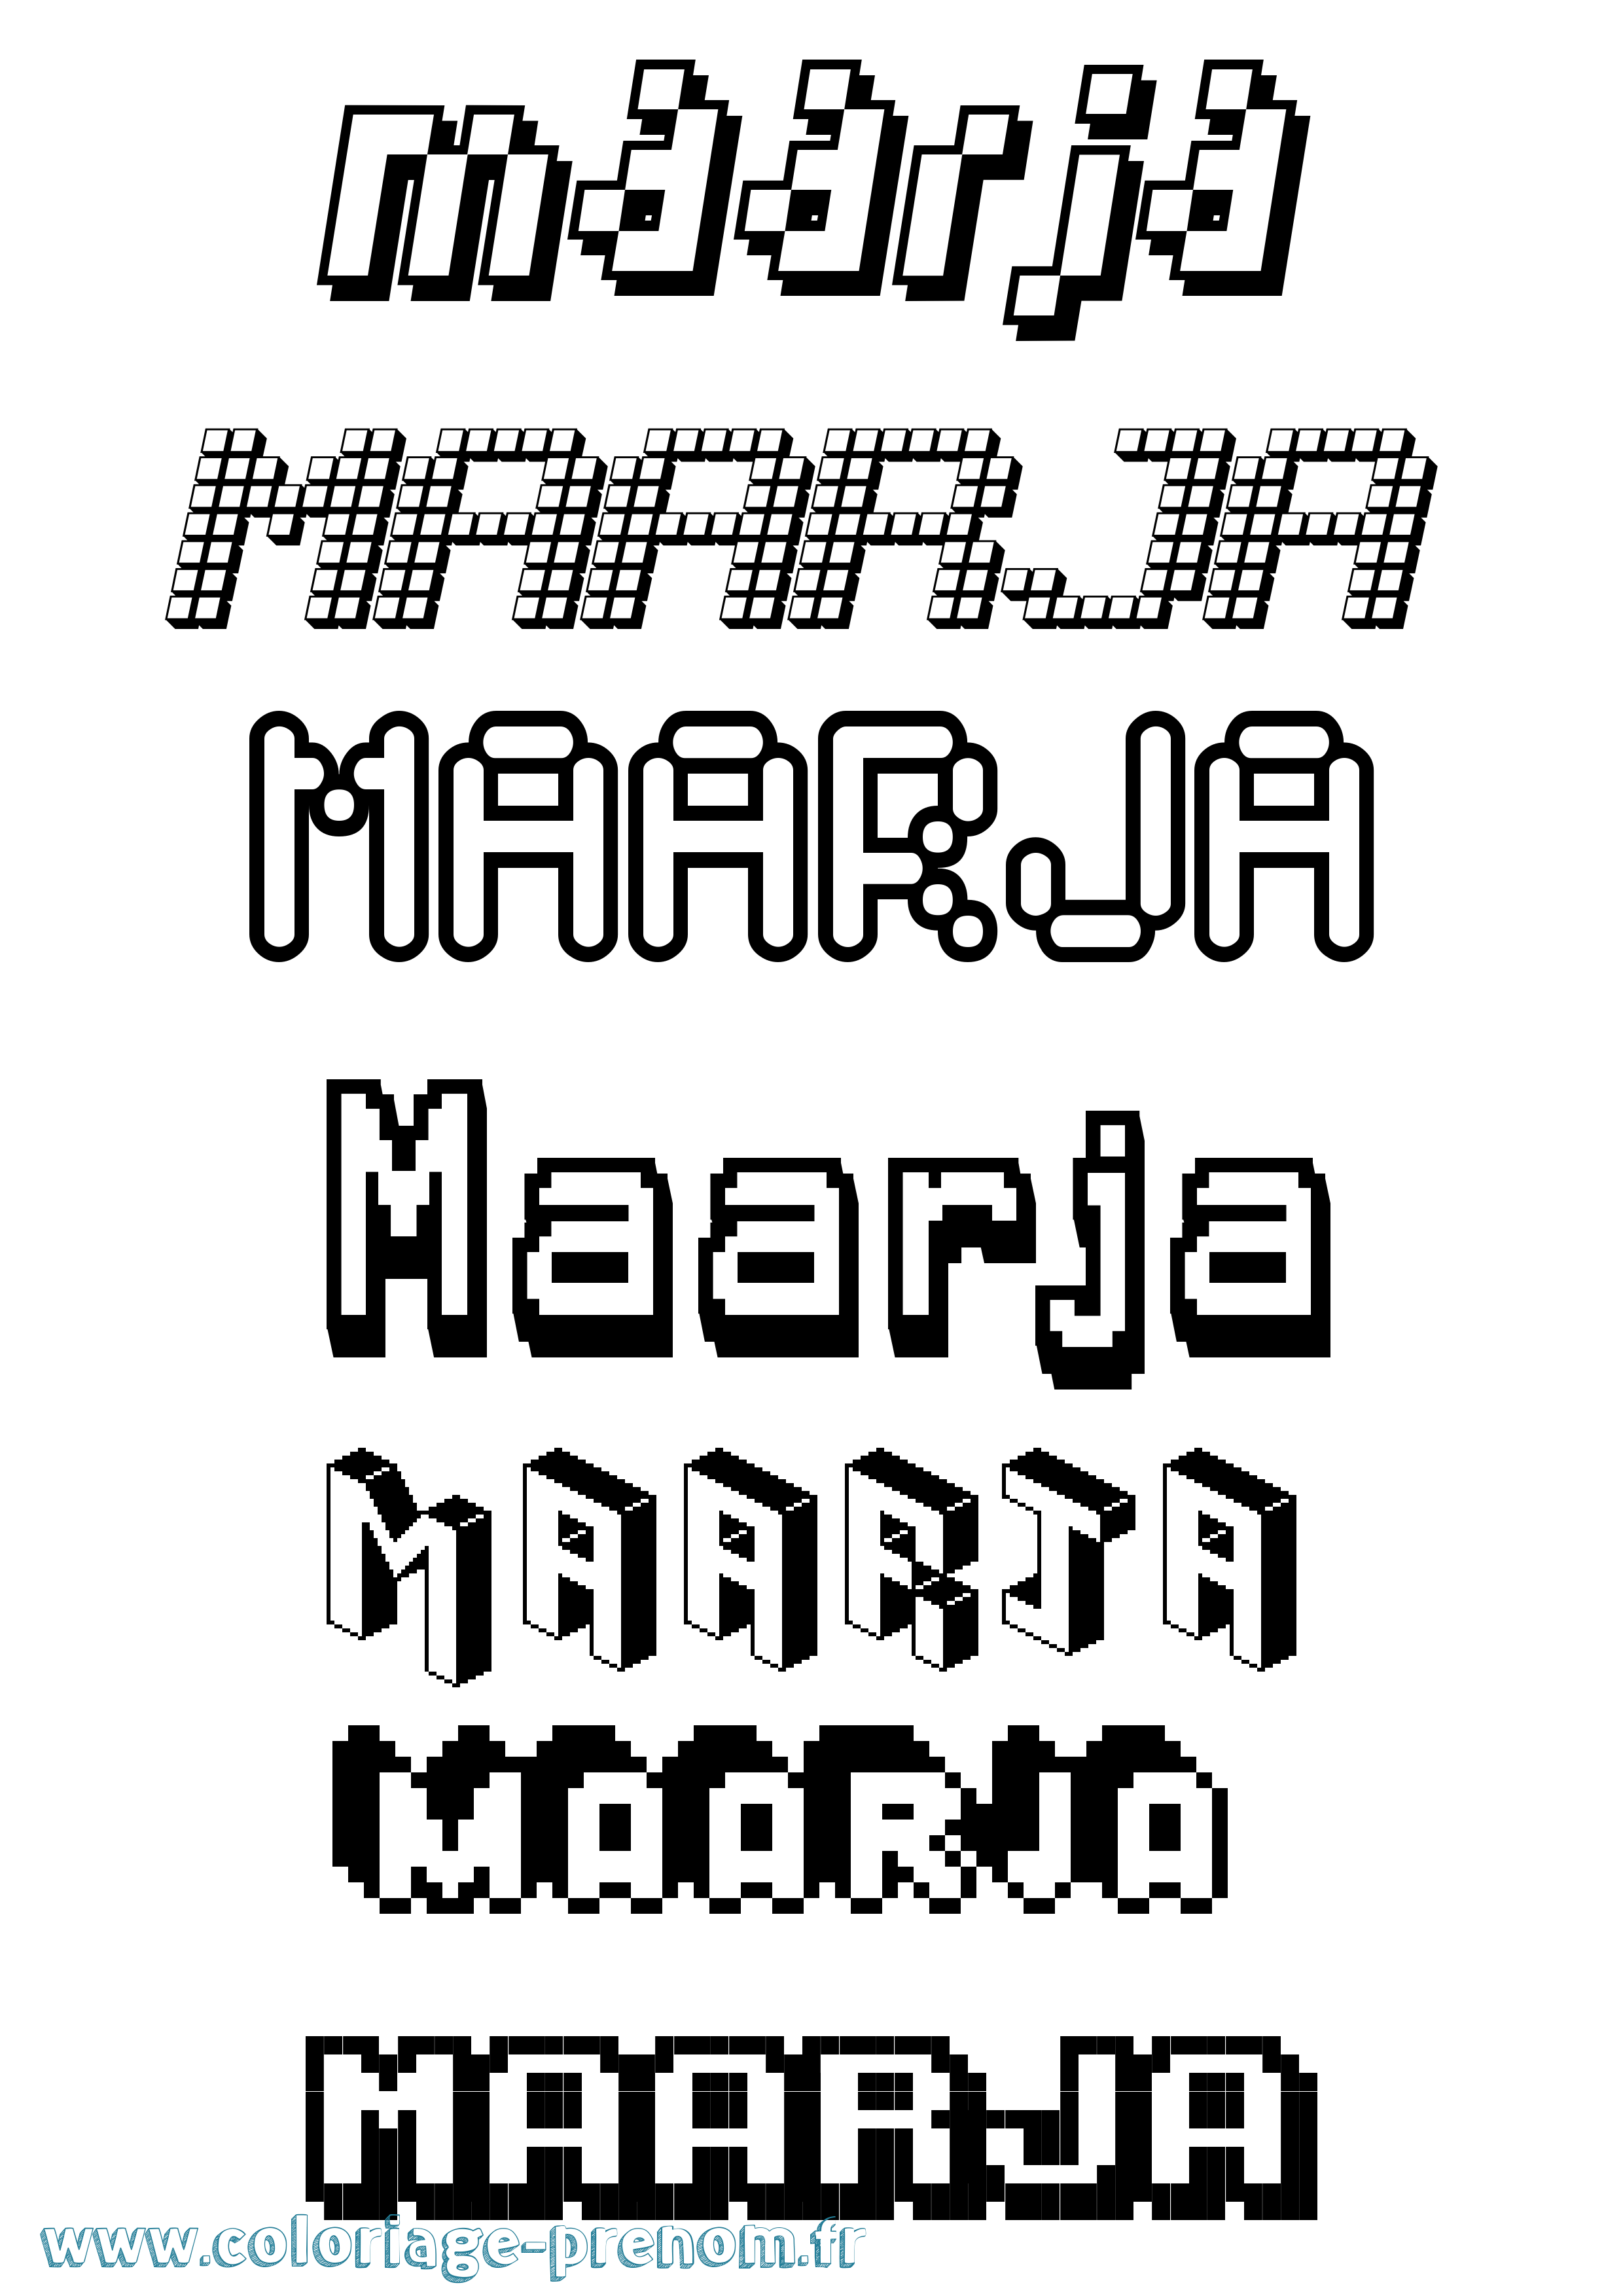 Coloriage prénom Maarja Pixel